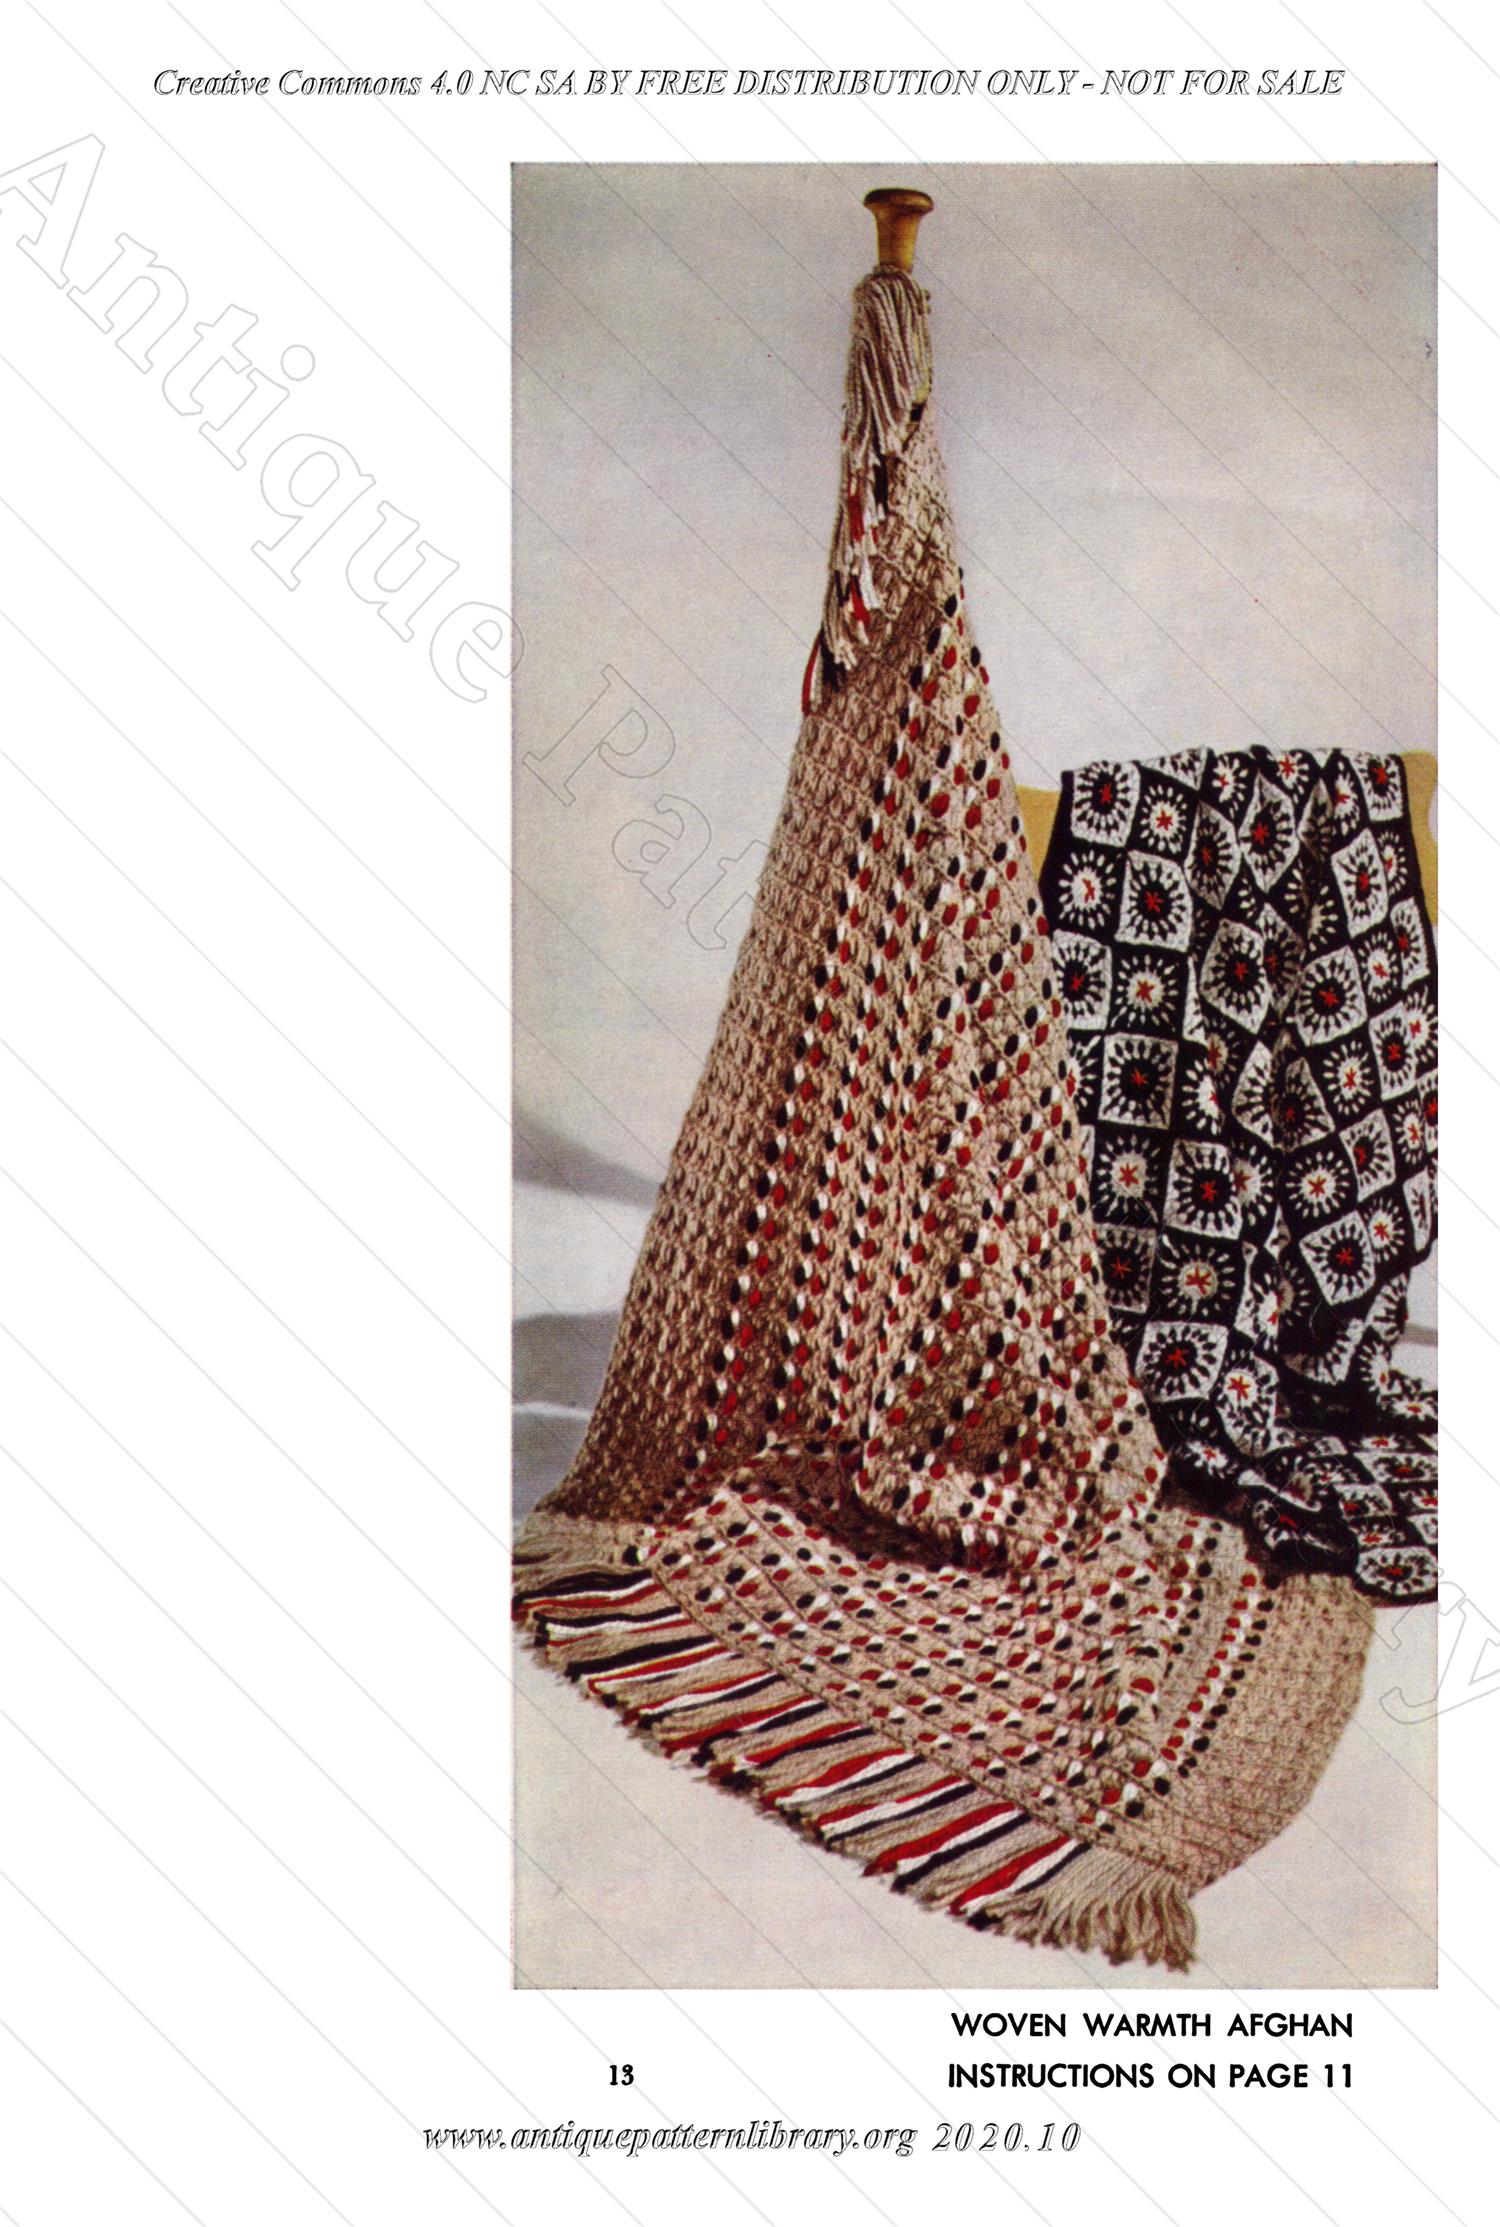 K-SB003 Afghans, Crocheted & Knitted